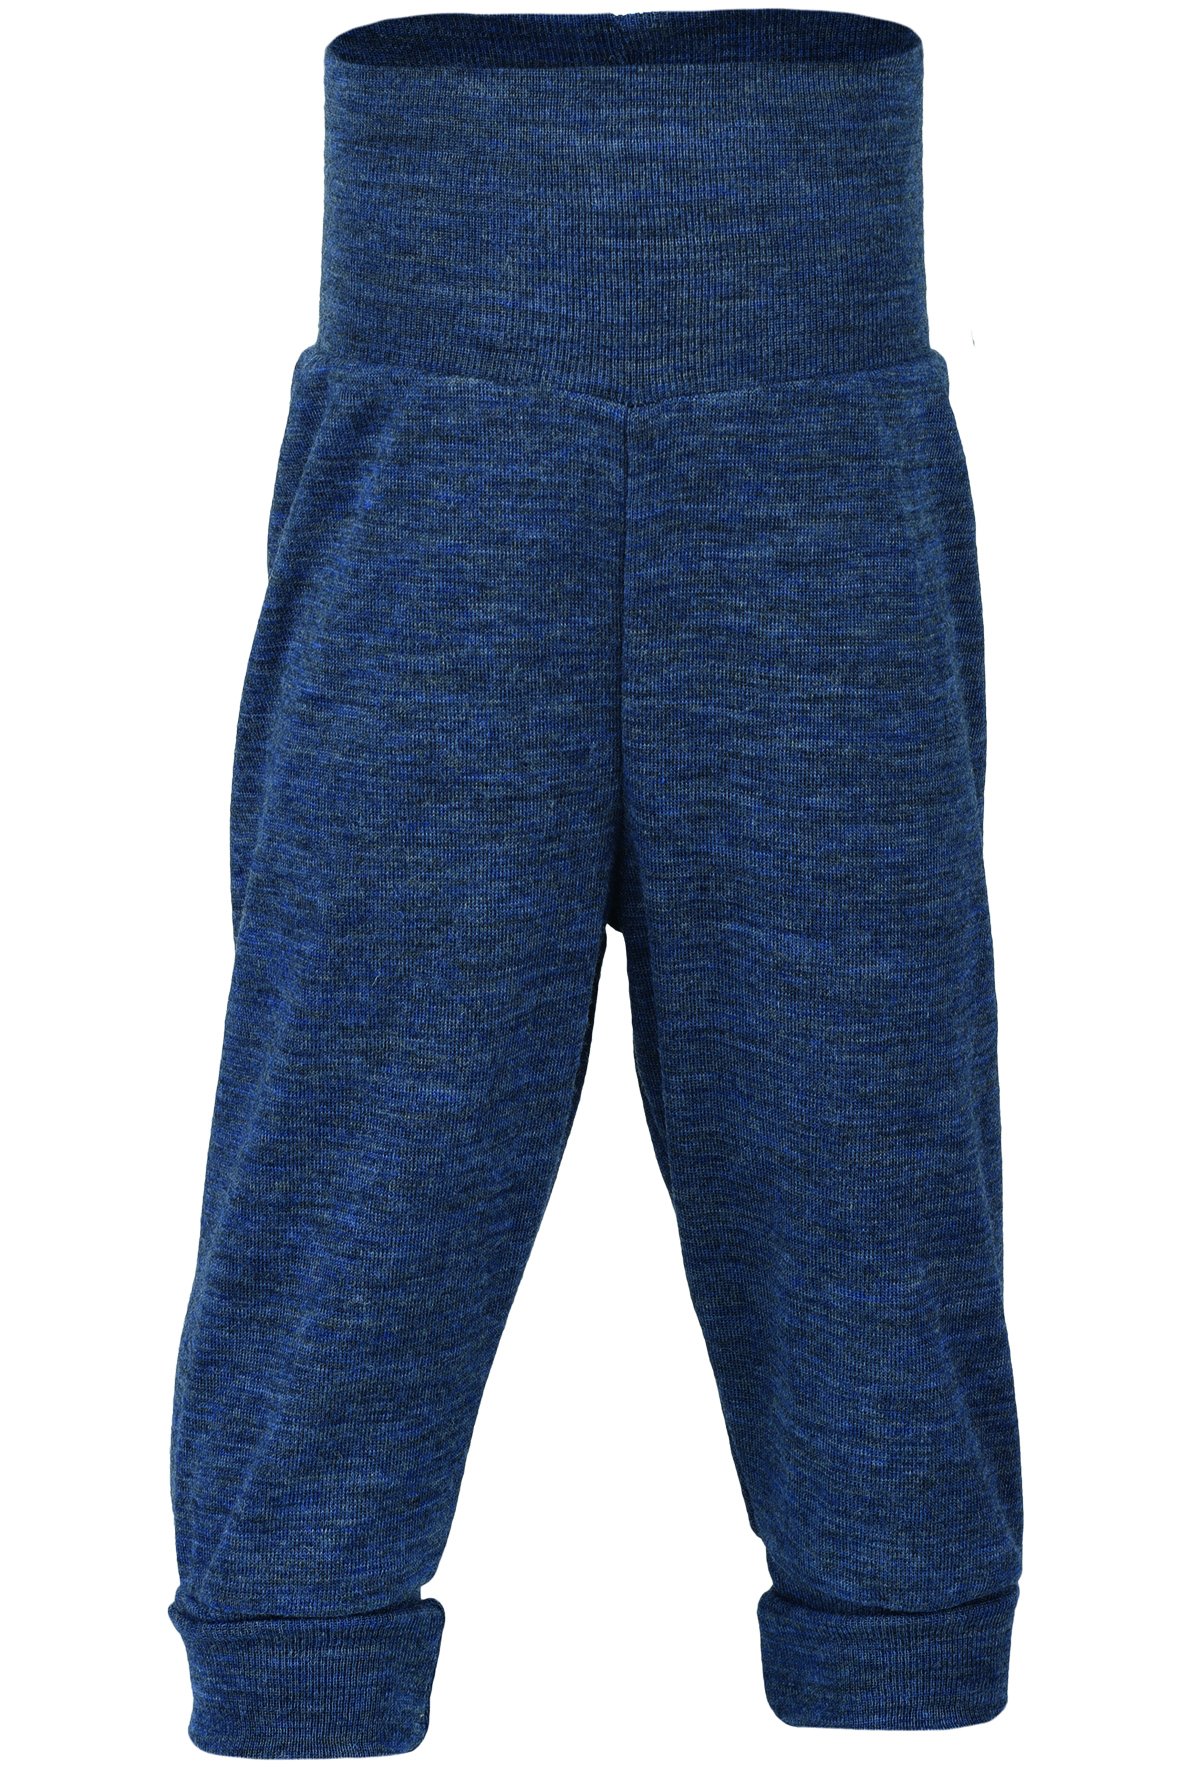 Engel 100% Organic Merino Wool Pants longies Pajama